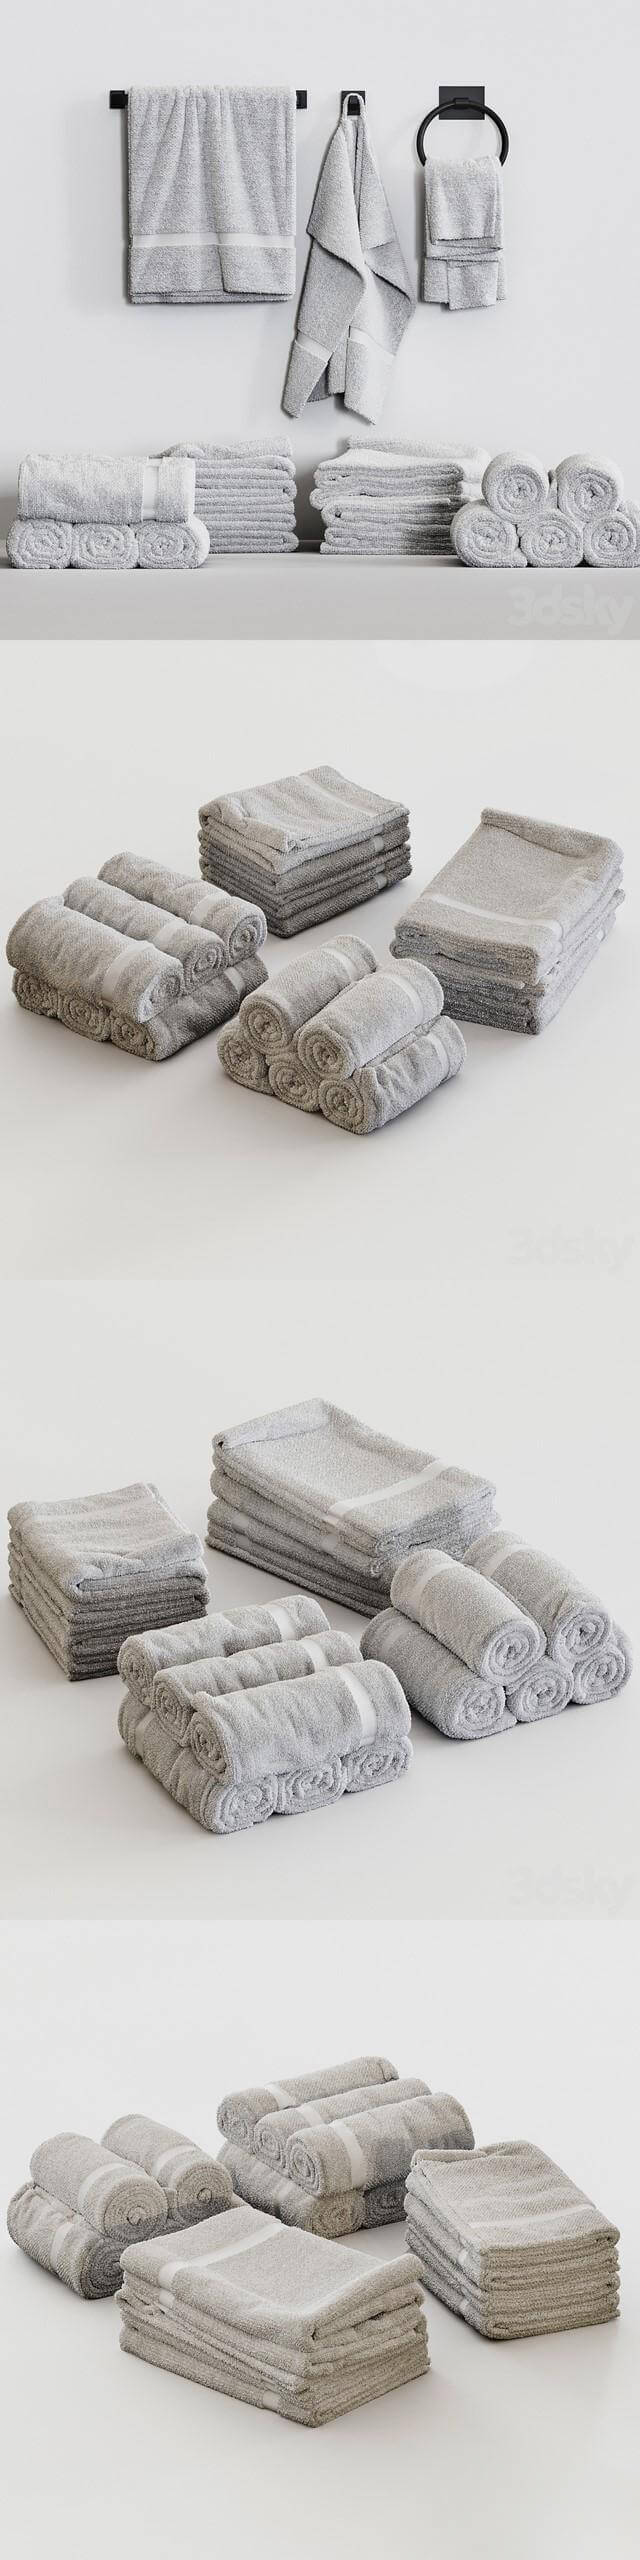 毛巾 02 3D 模型MAX | FBX | OBJ | TEX插图